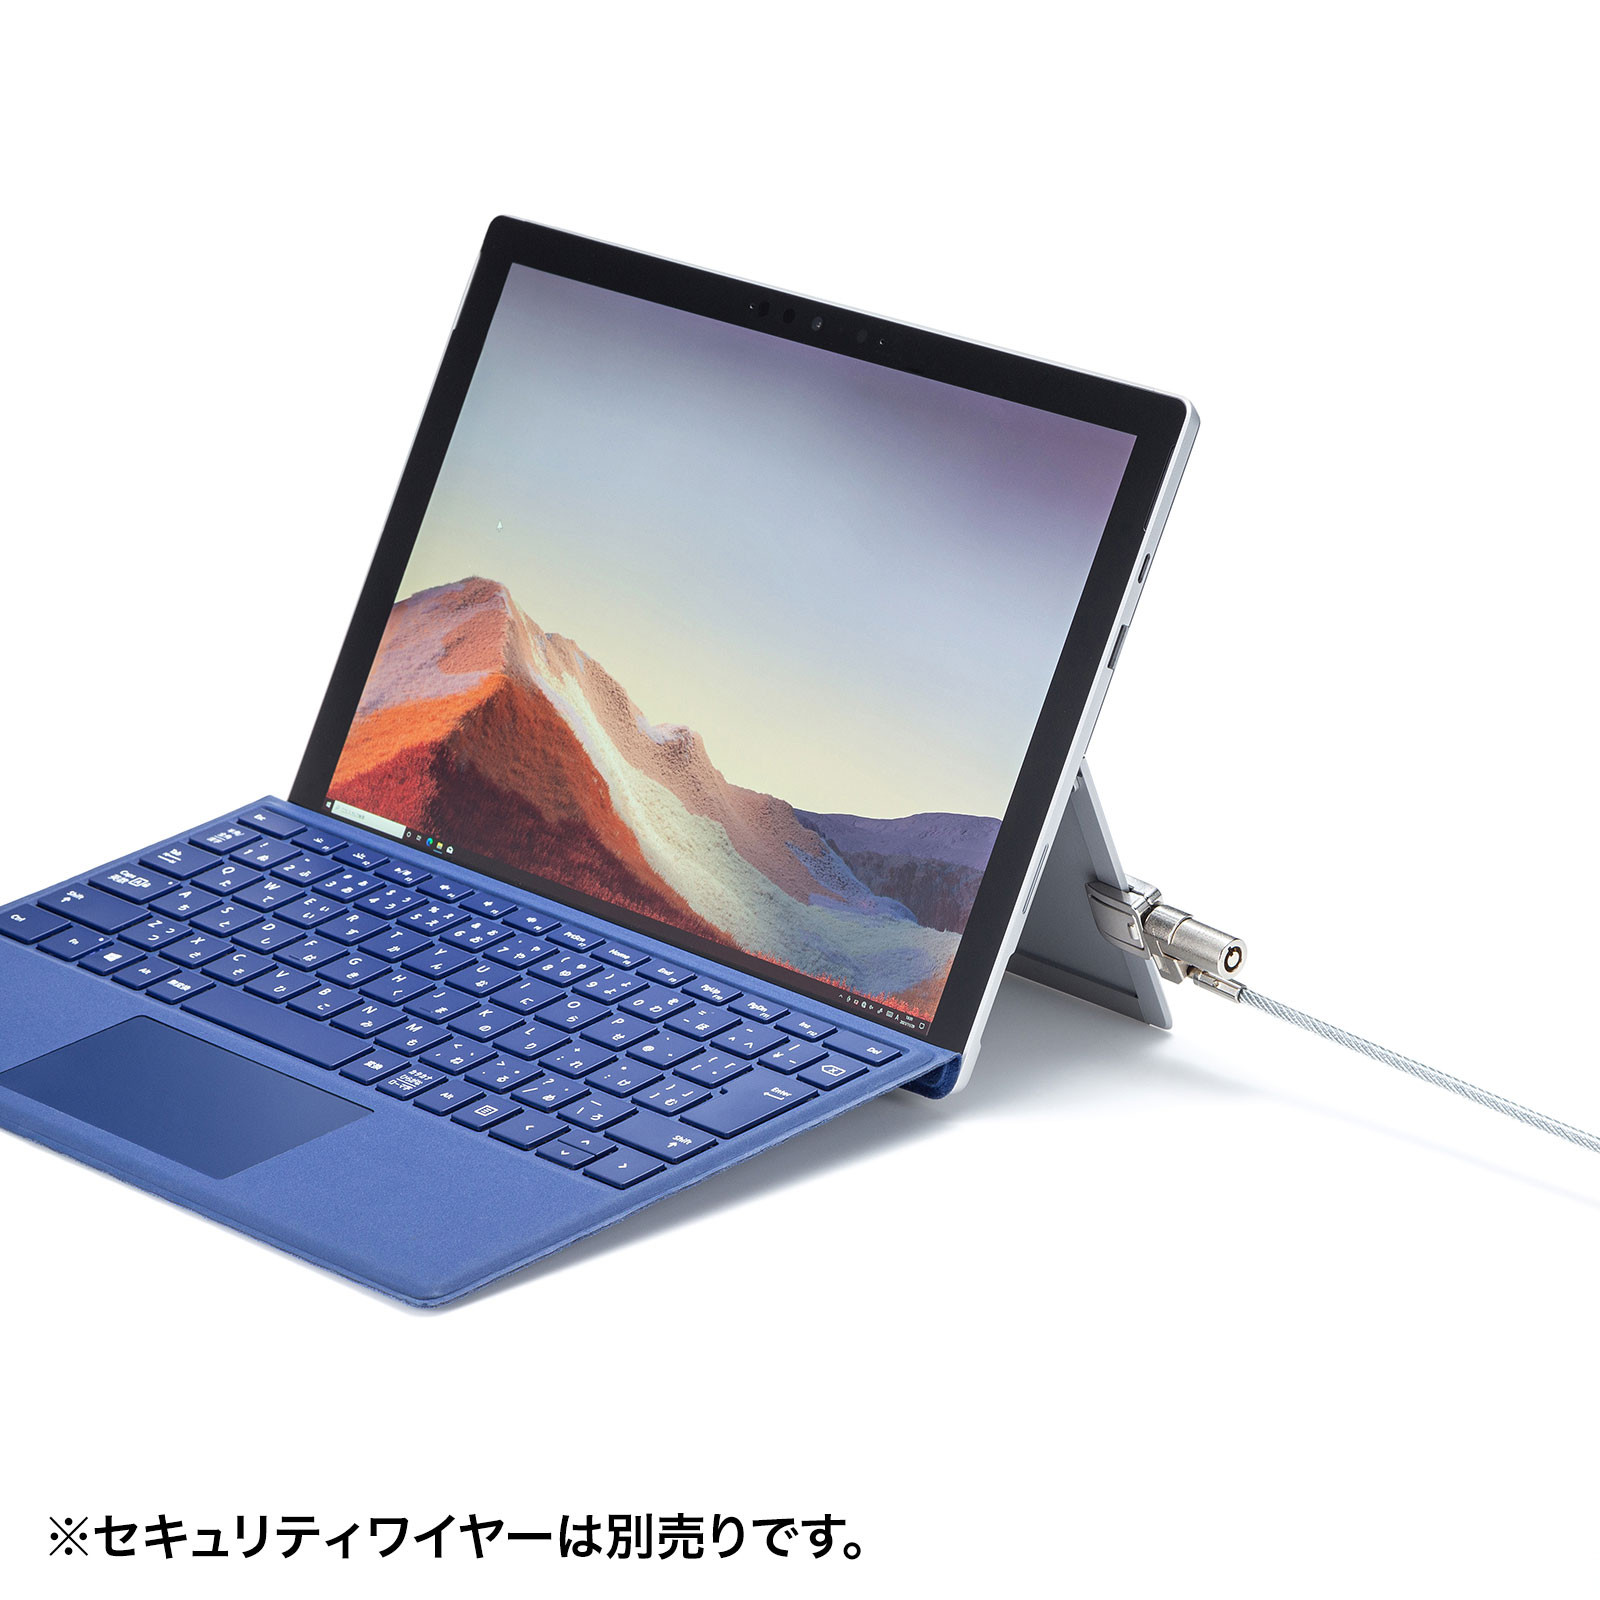 Microsoft Surfaceシリーズにセキュリティスロットを取り付けできるセキュリティパーツを発売｜サンワサプライ株式会社のプレスリリース